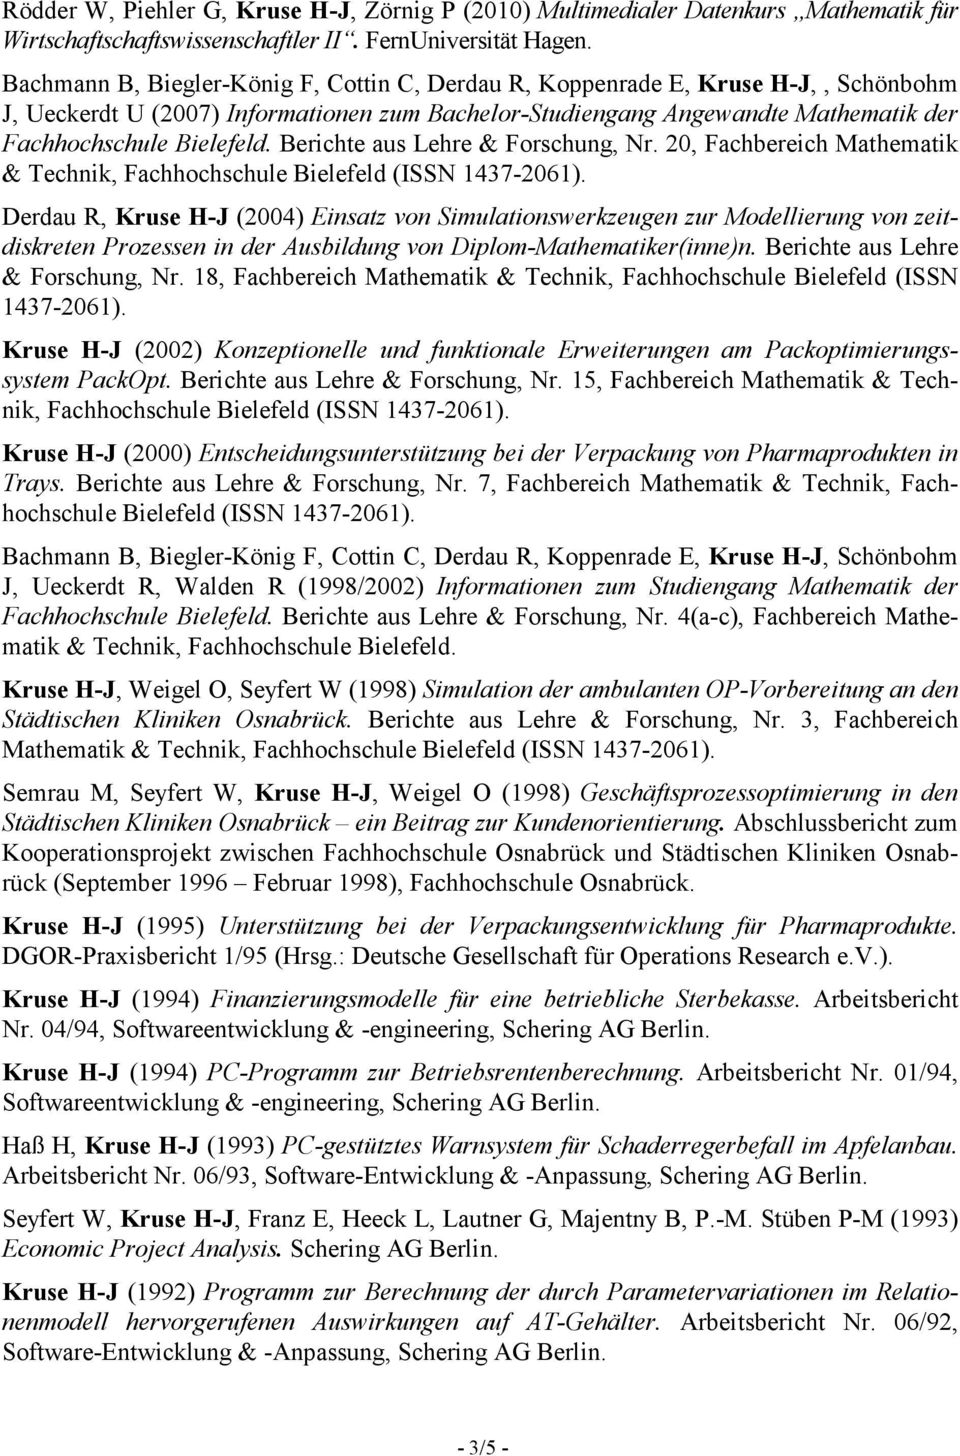 Berichte aus Lehre & Forschung, Nr. 20, Fachbereich Mathematik & Technik, Fachhochschule Bielefeld (ISSN 1437-2061).